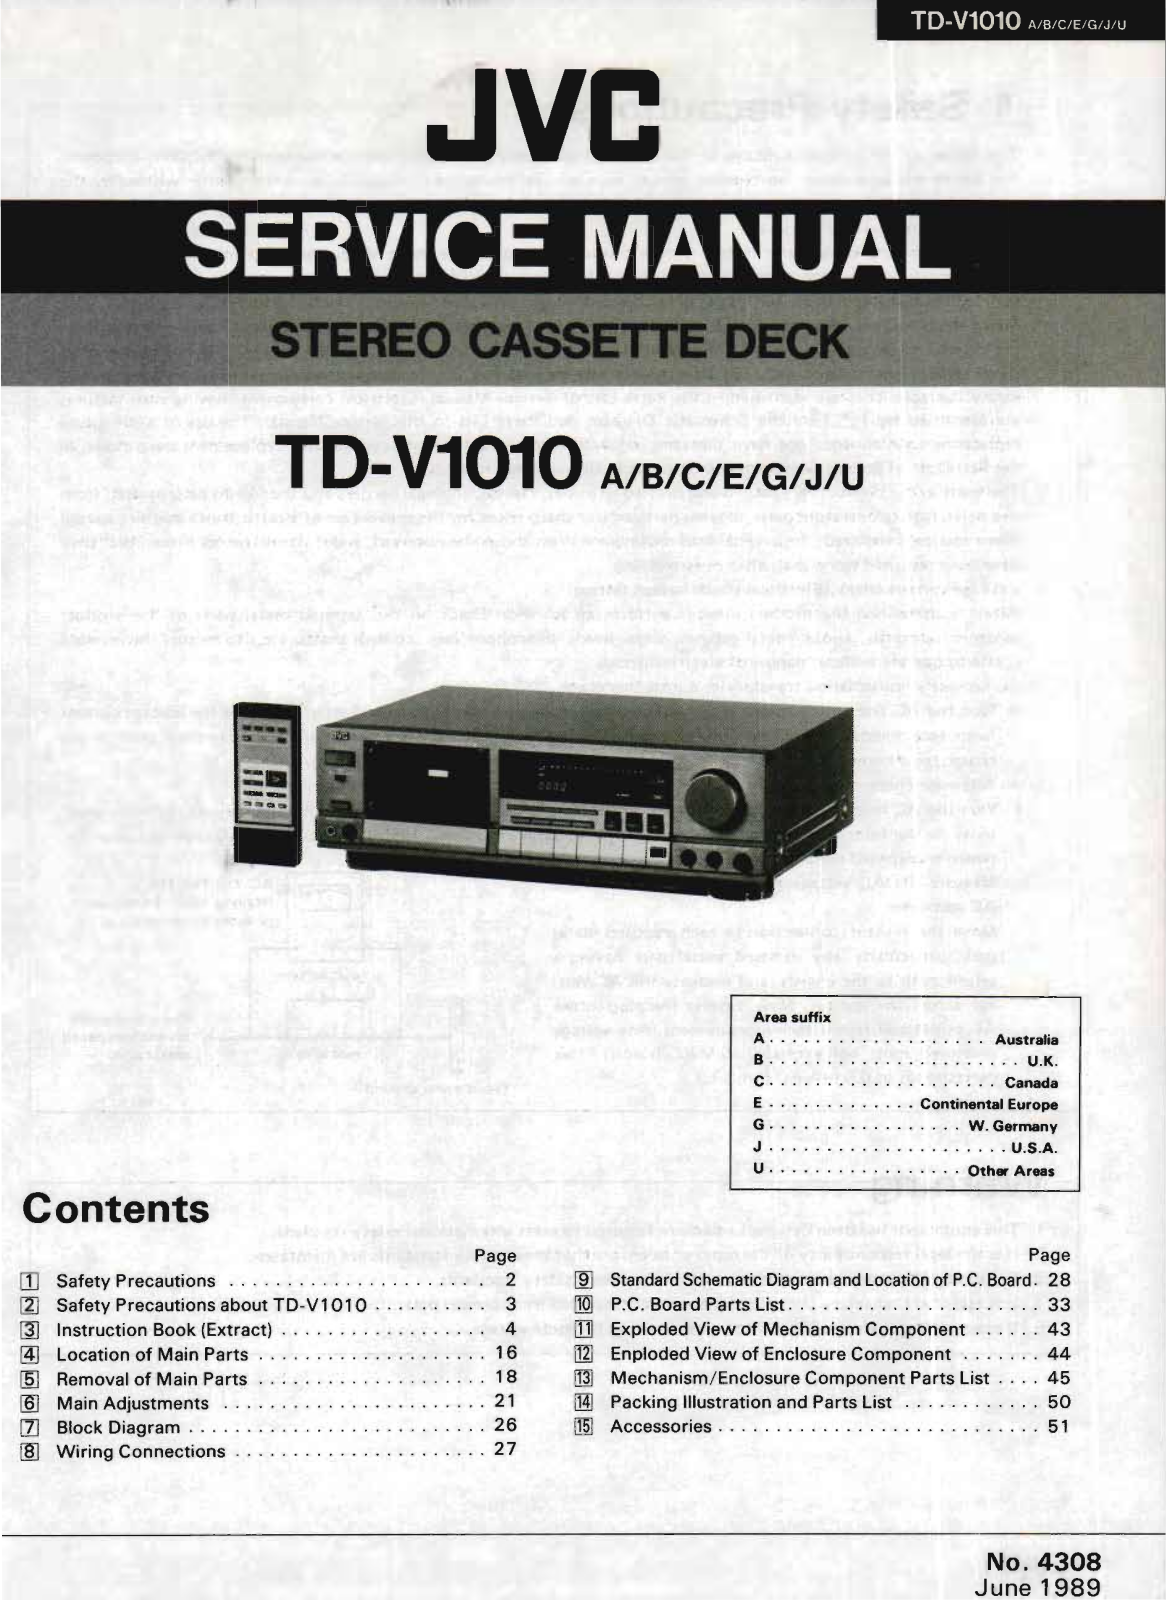 Jvc TD-V1010 Service Manual